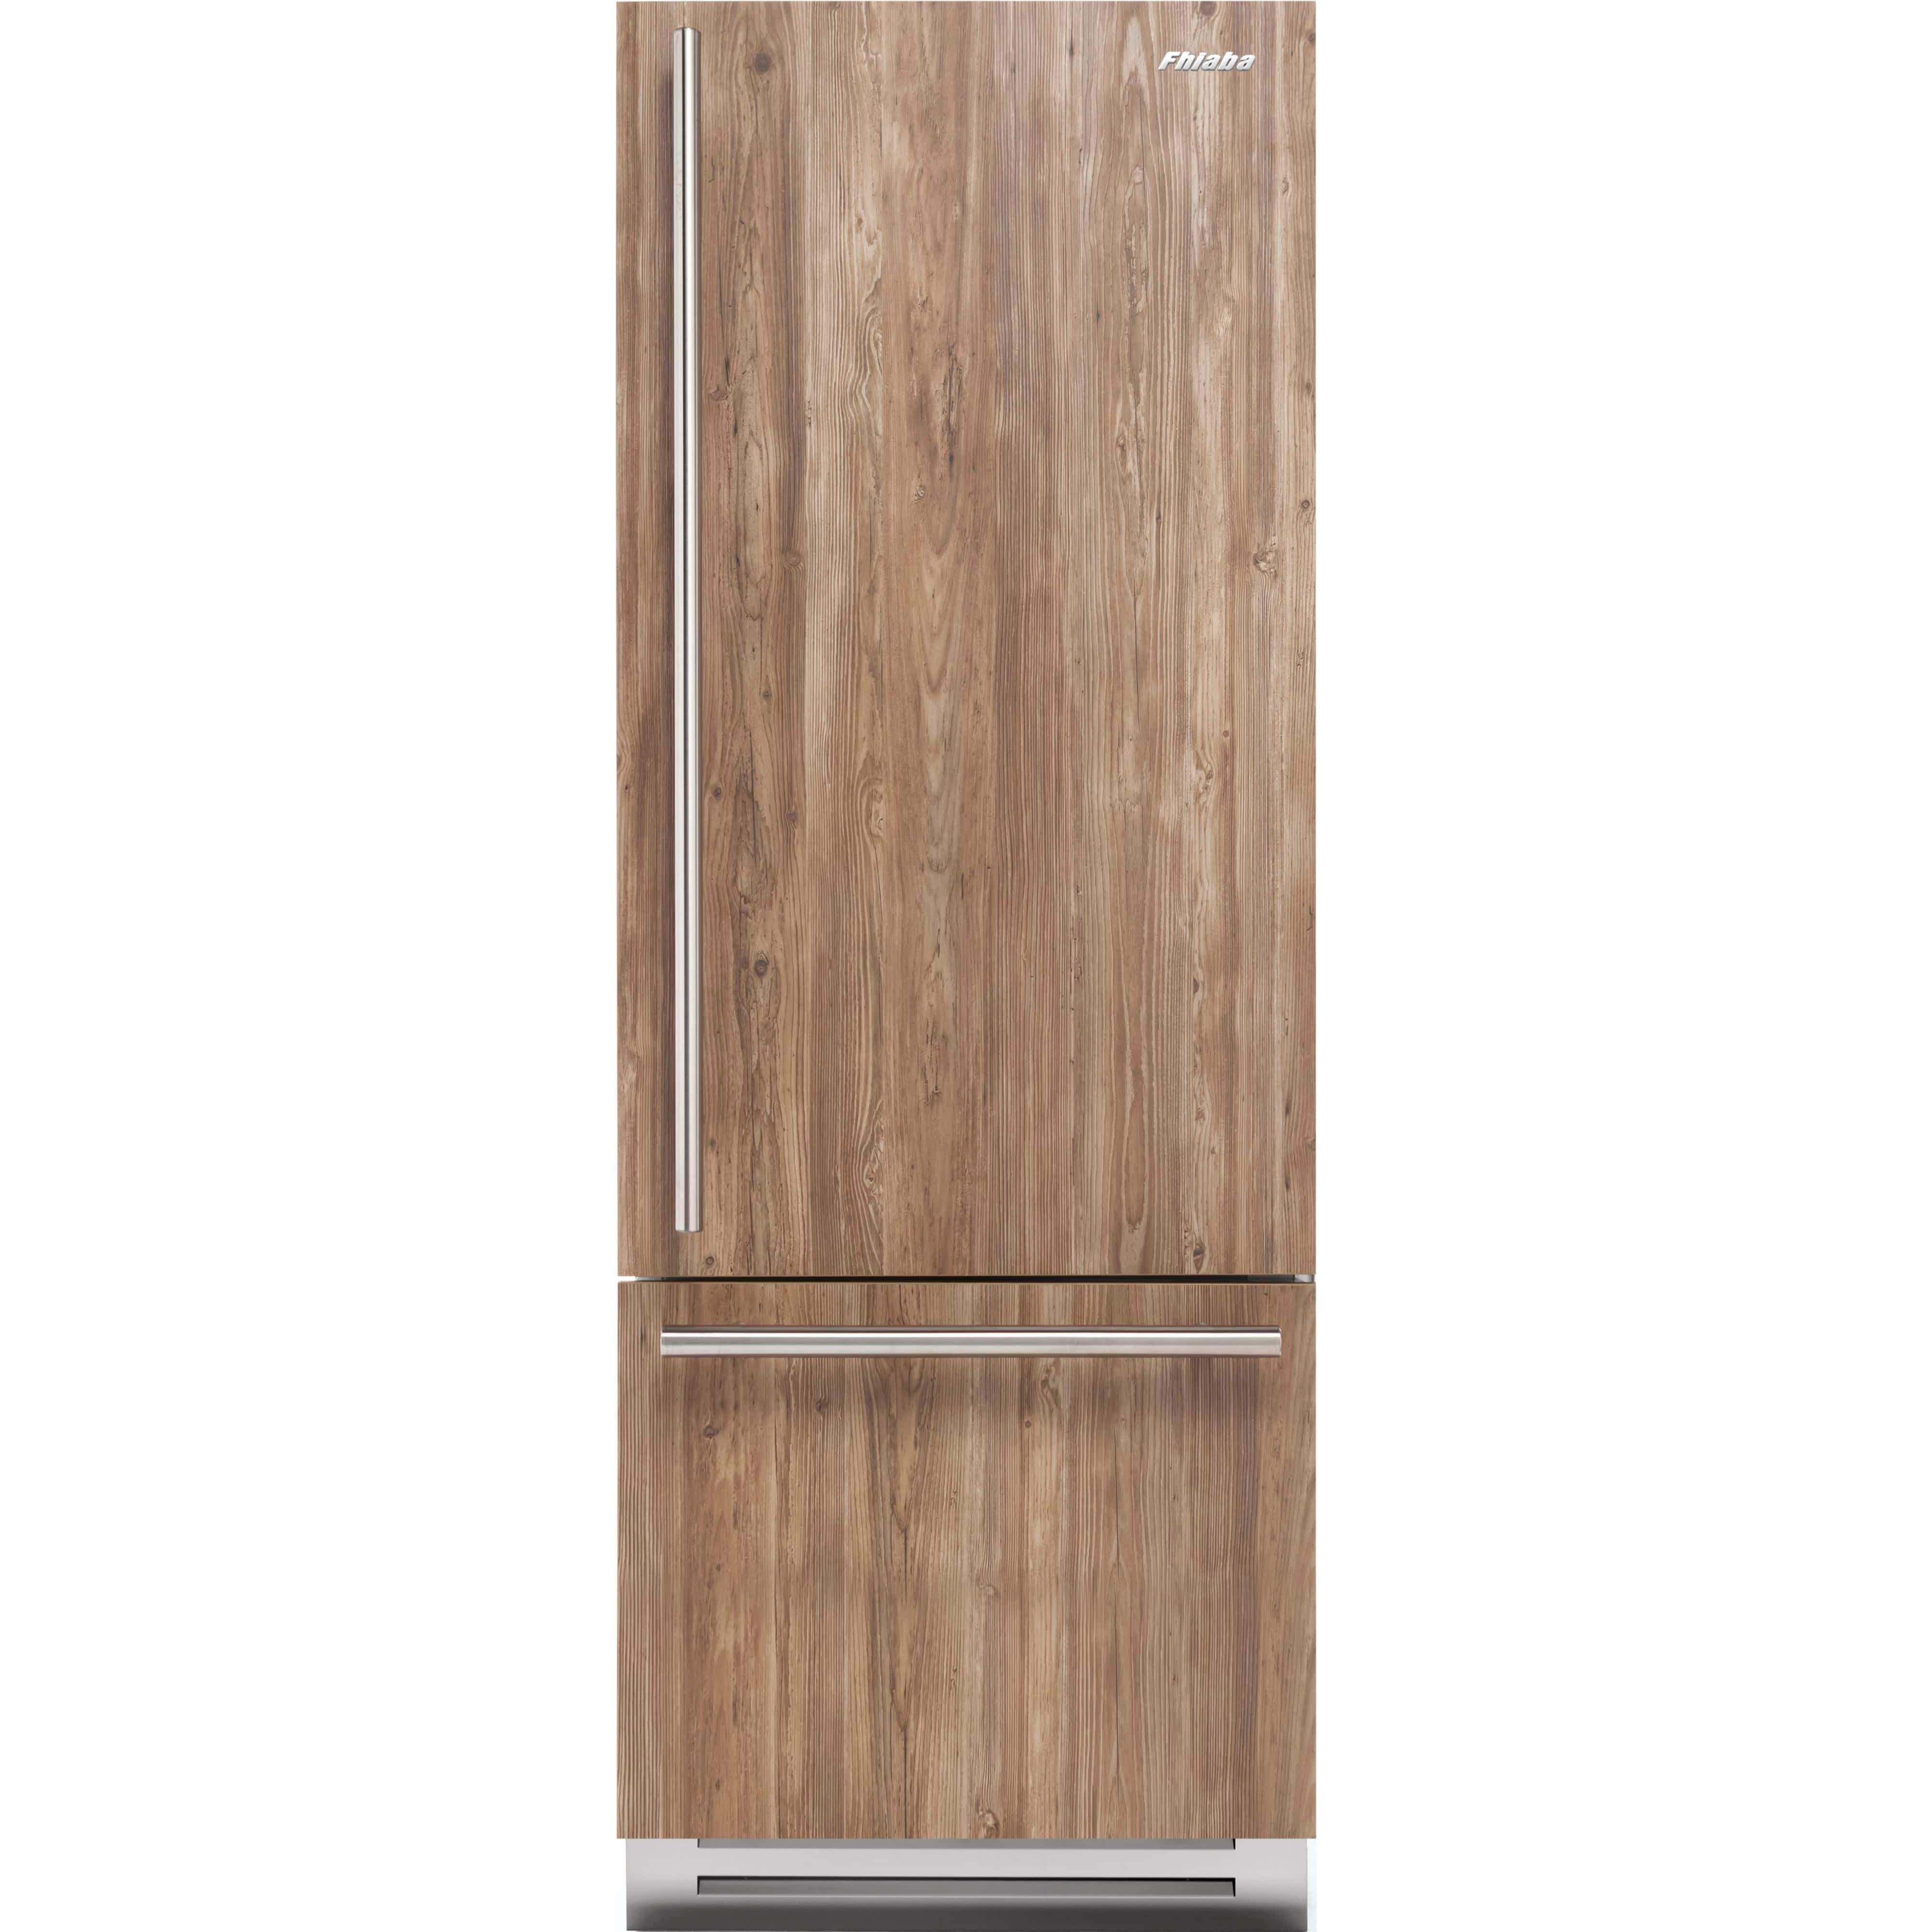 Fhiaba 30-inch, 14.5 cu.ft. Built-in Bottom Freezer Refrigerator with Interior Ice Maker FI30BI-RO1 Refrigerators FI30BIRO1 Luxury Appliances Direct